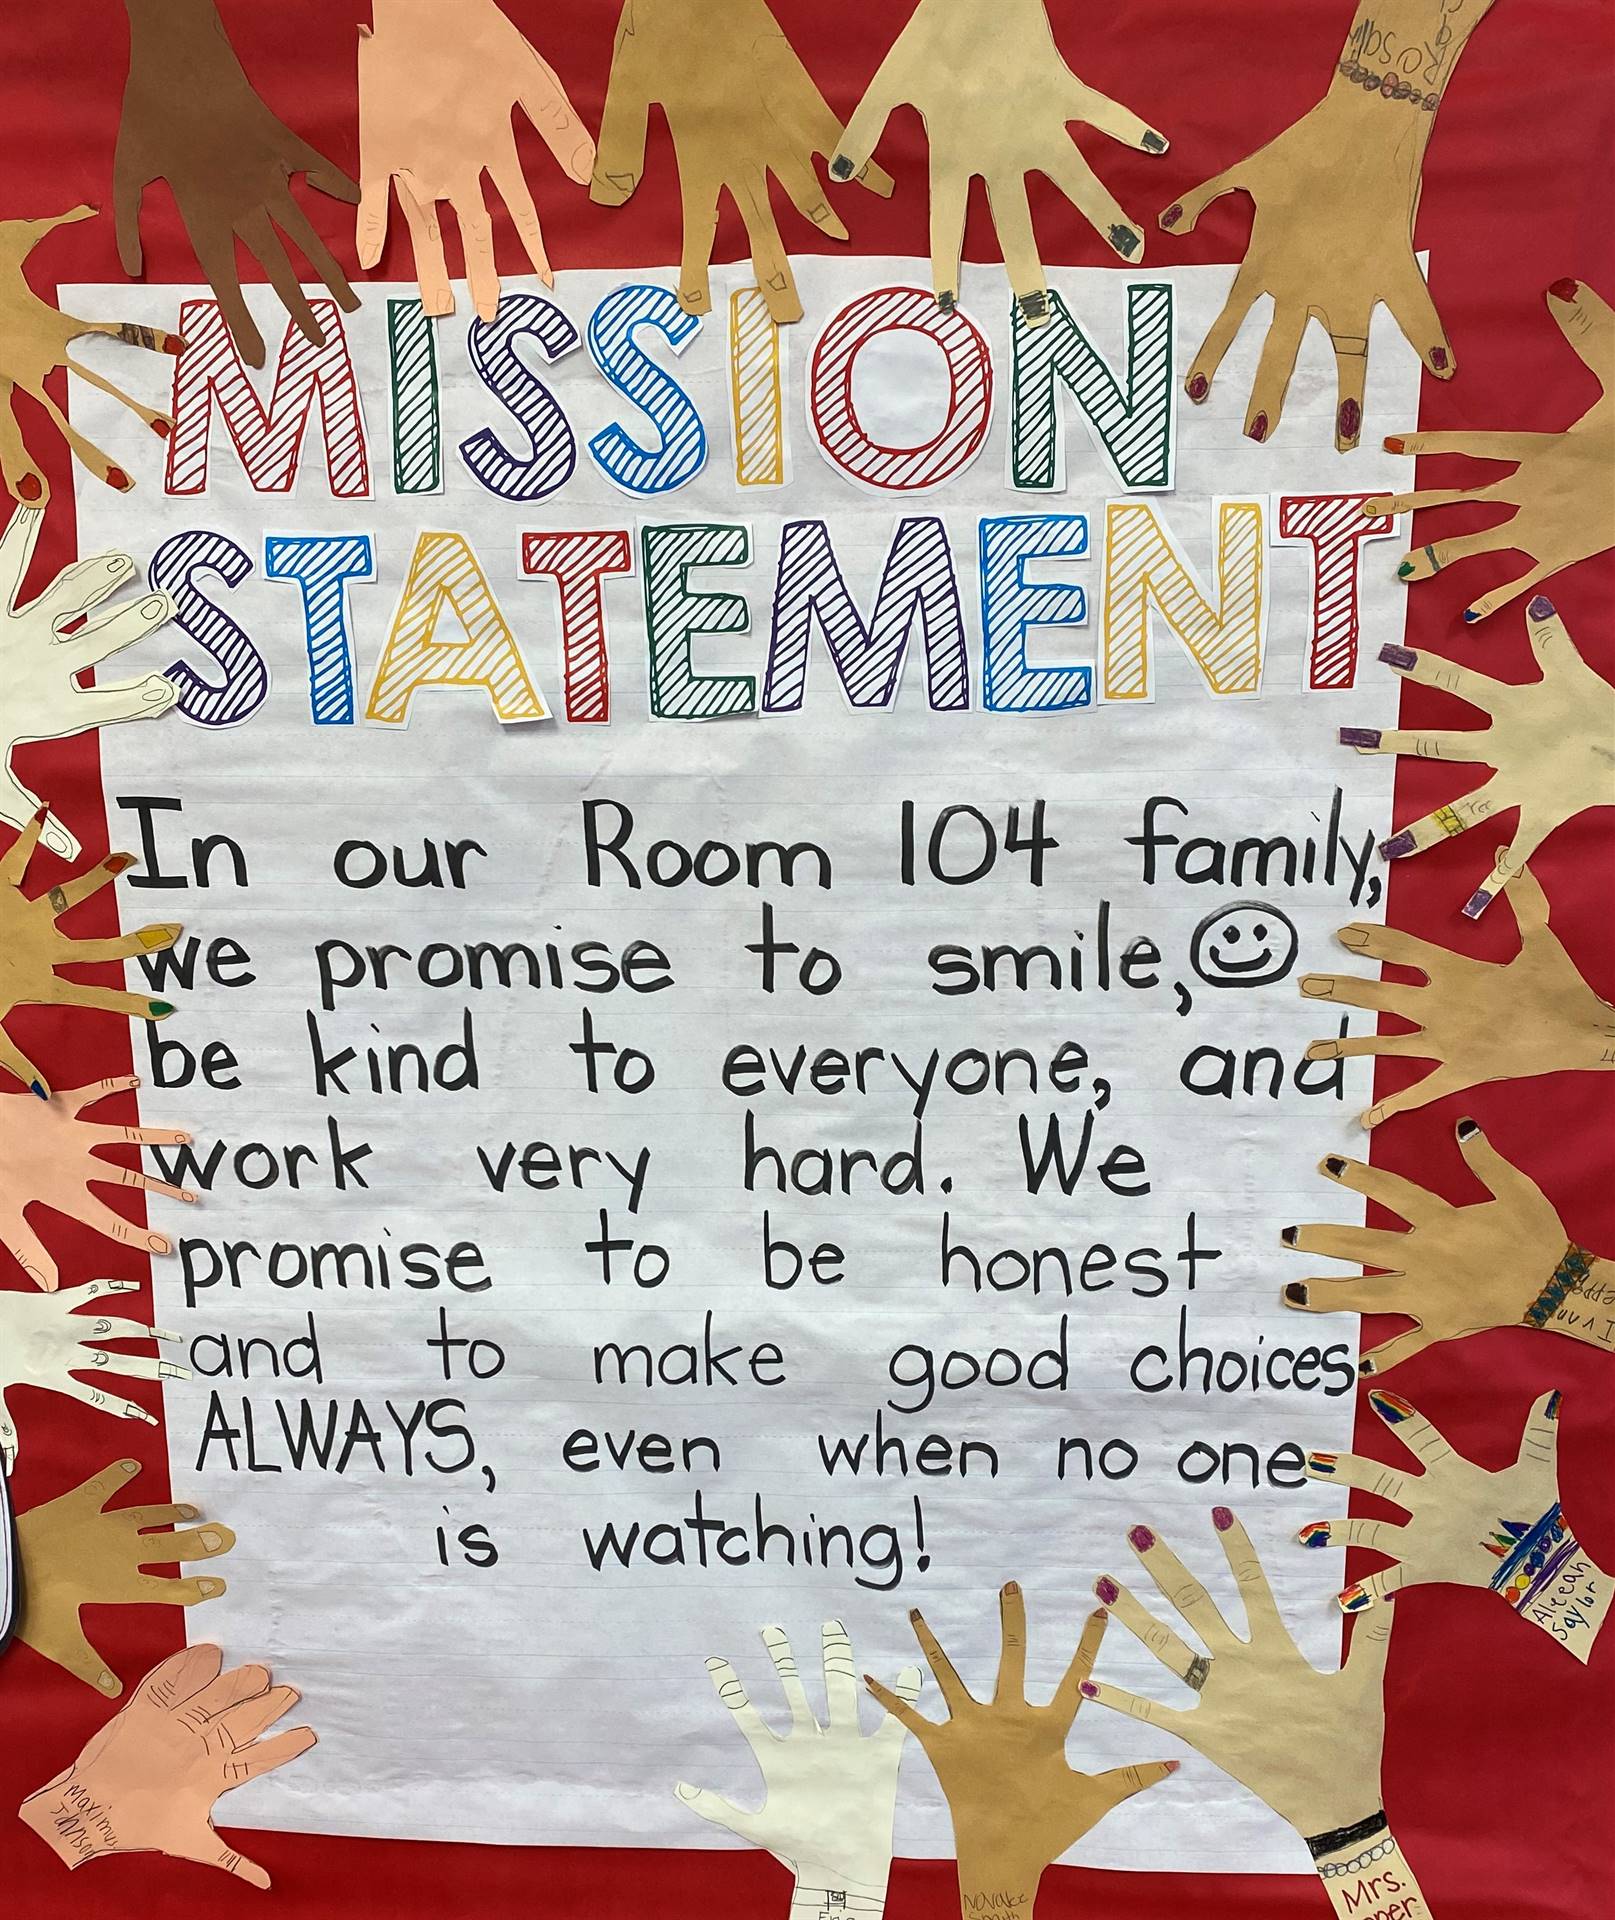 Mrs. Opper's Mission Statement